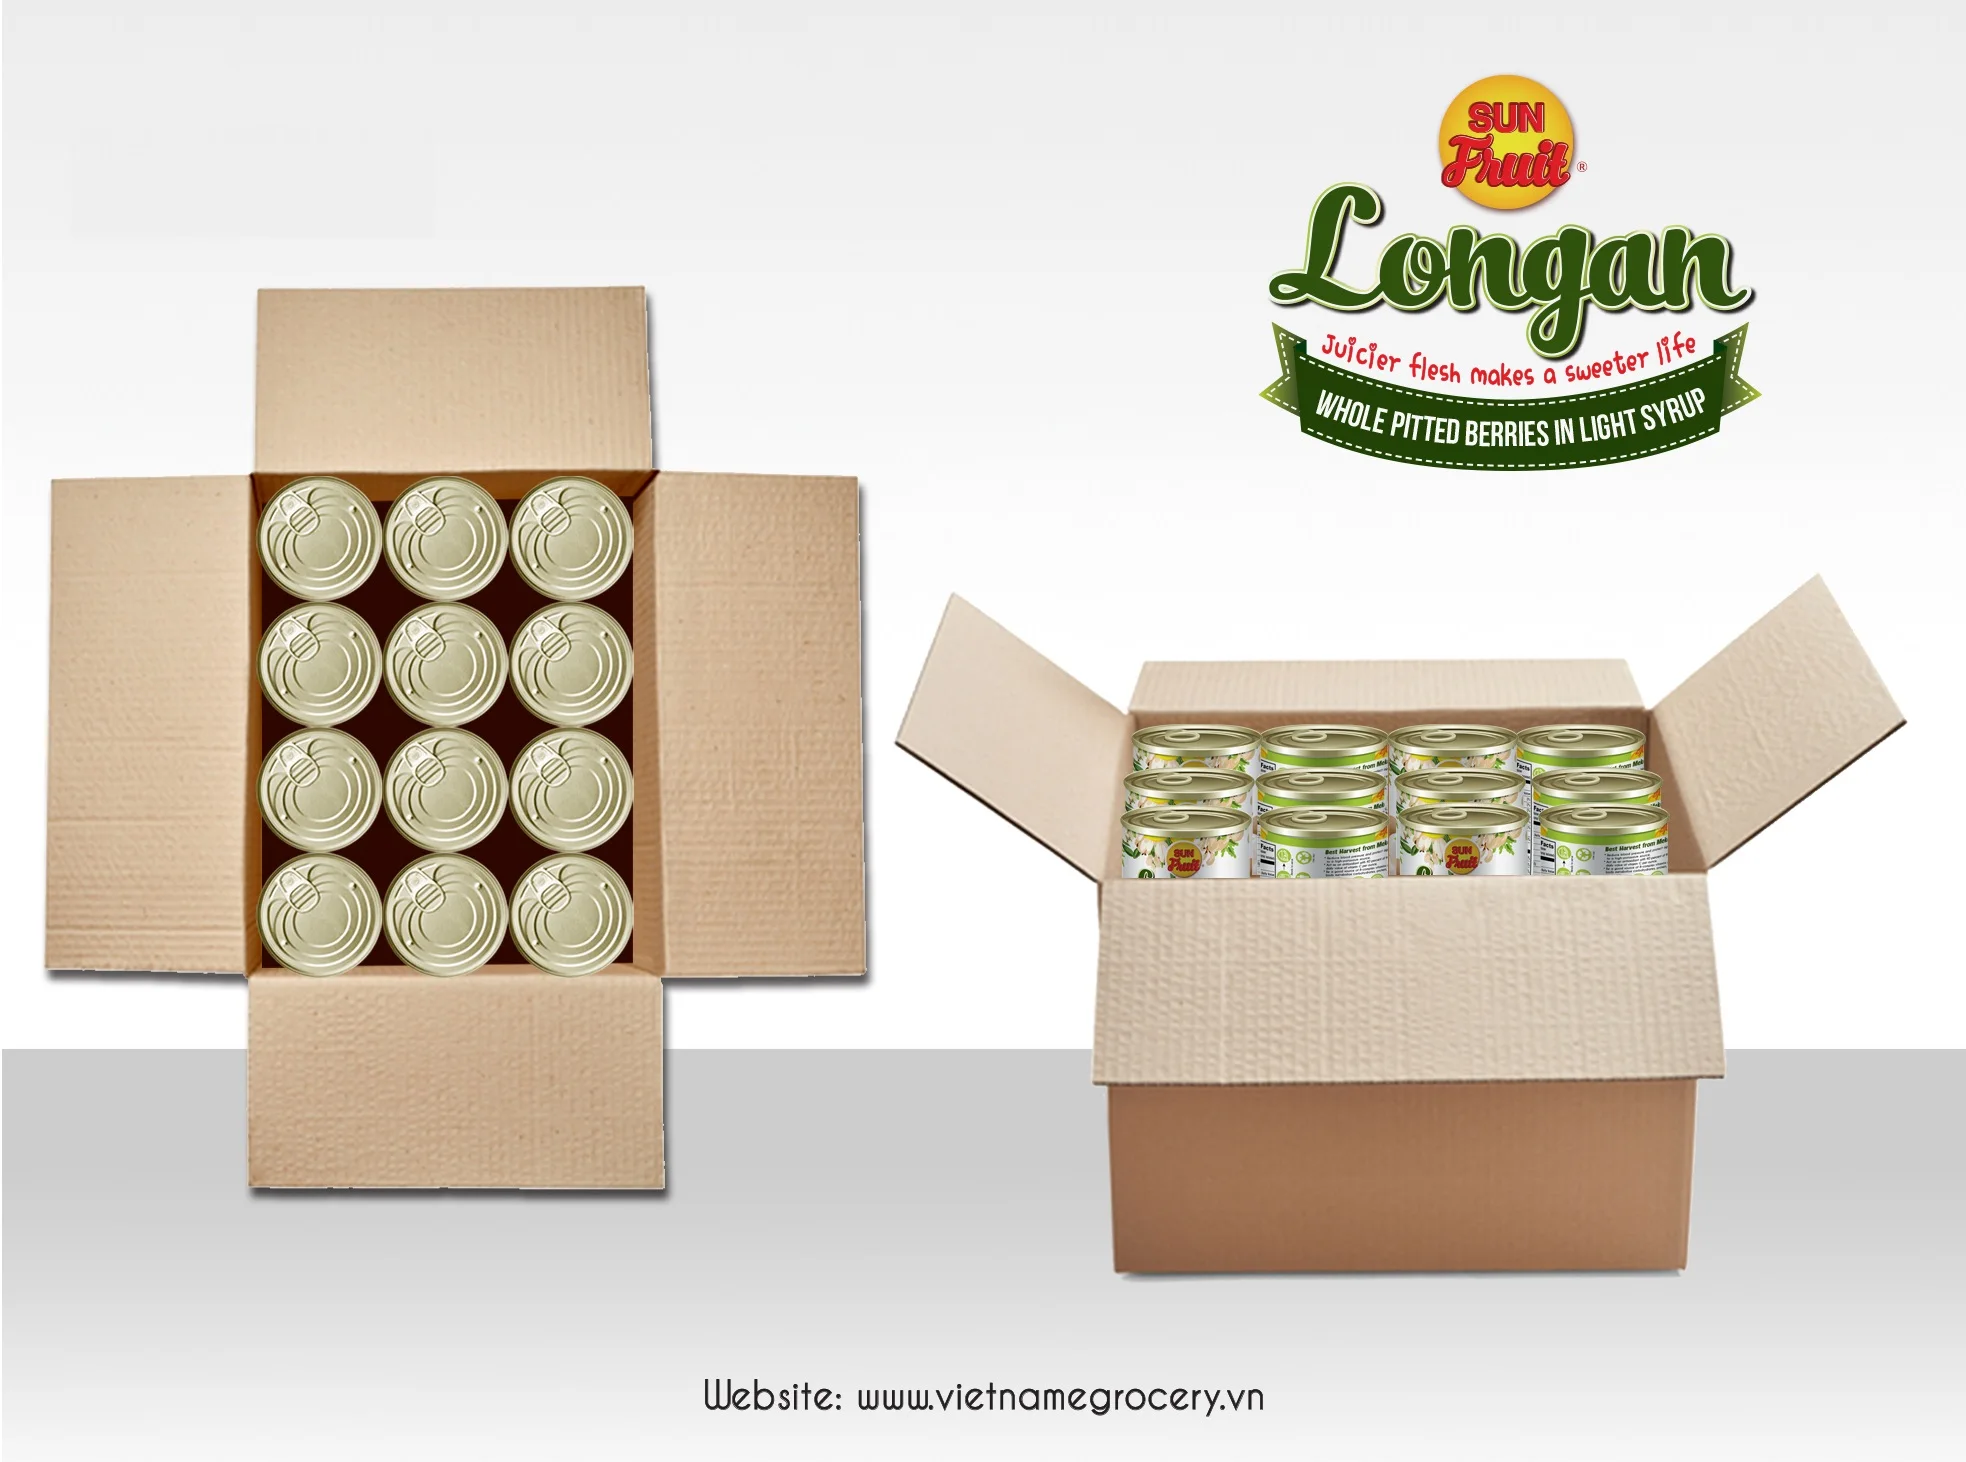 Vietnam Longan in Light Syrup 20oz - Good Price